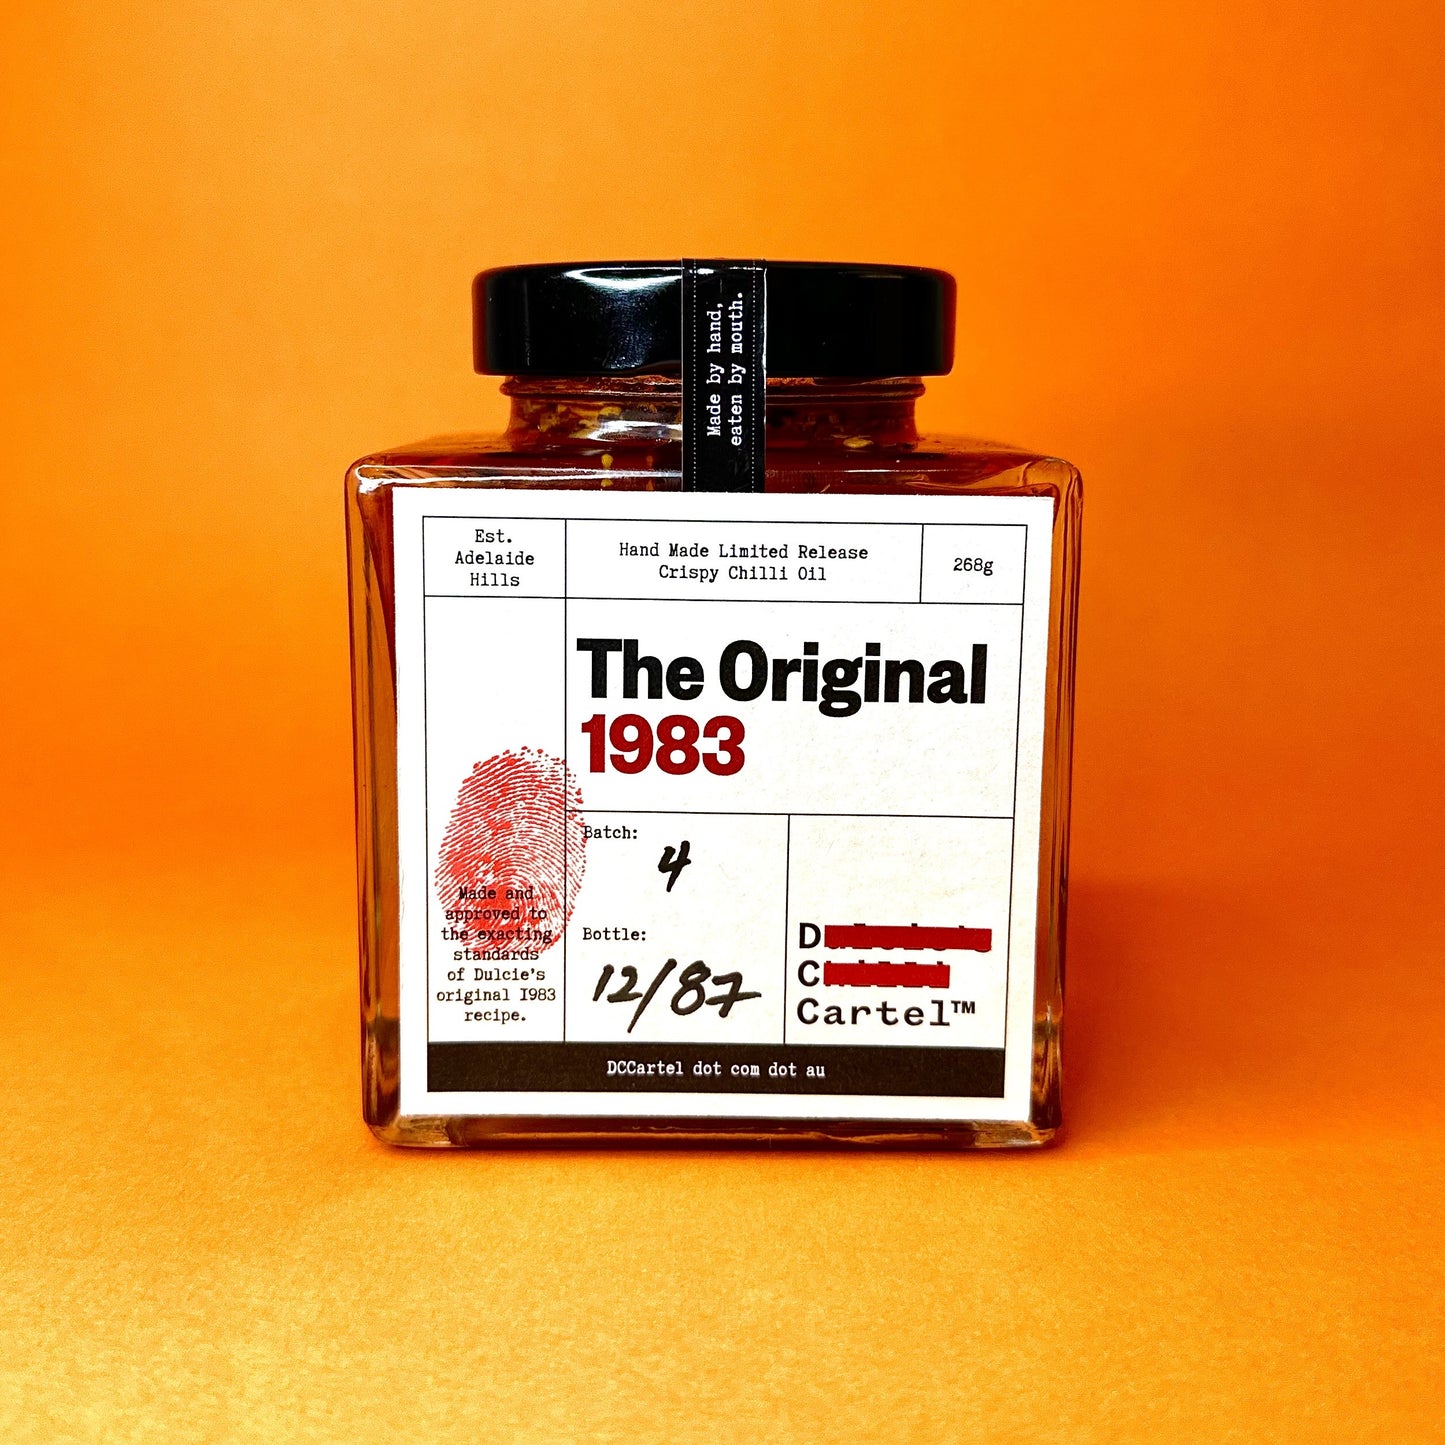 DC CARTEL: The Original 1983- Limited Release Crispy Chilli Oil - 268g